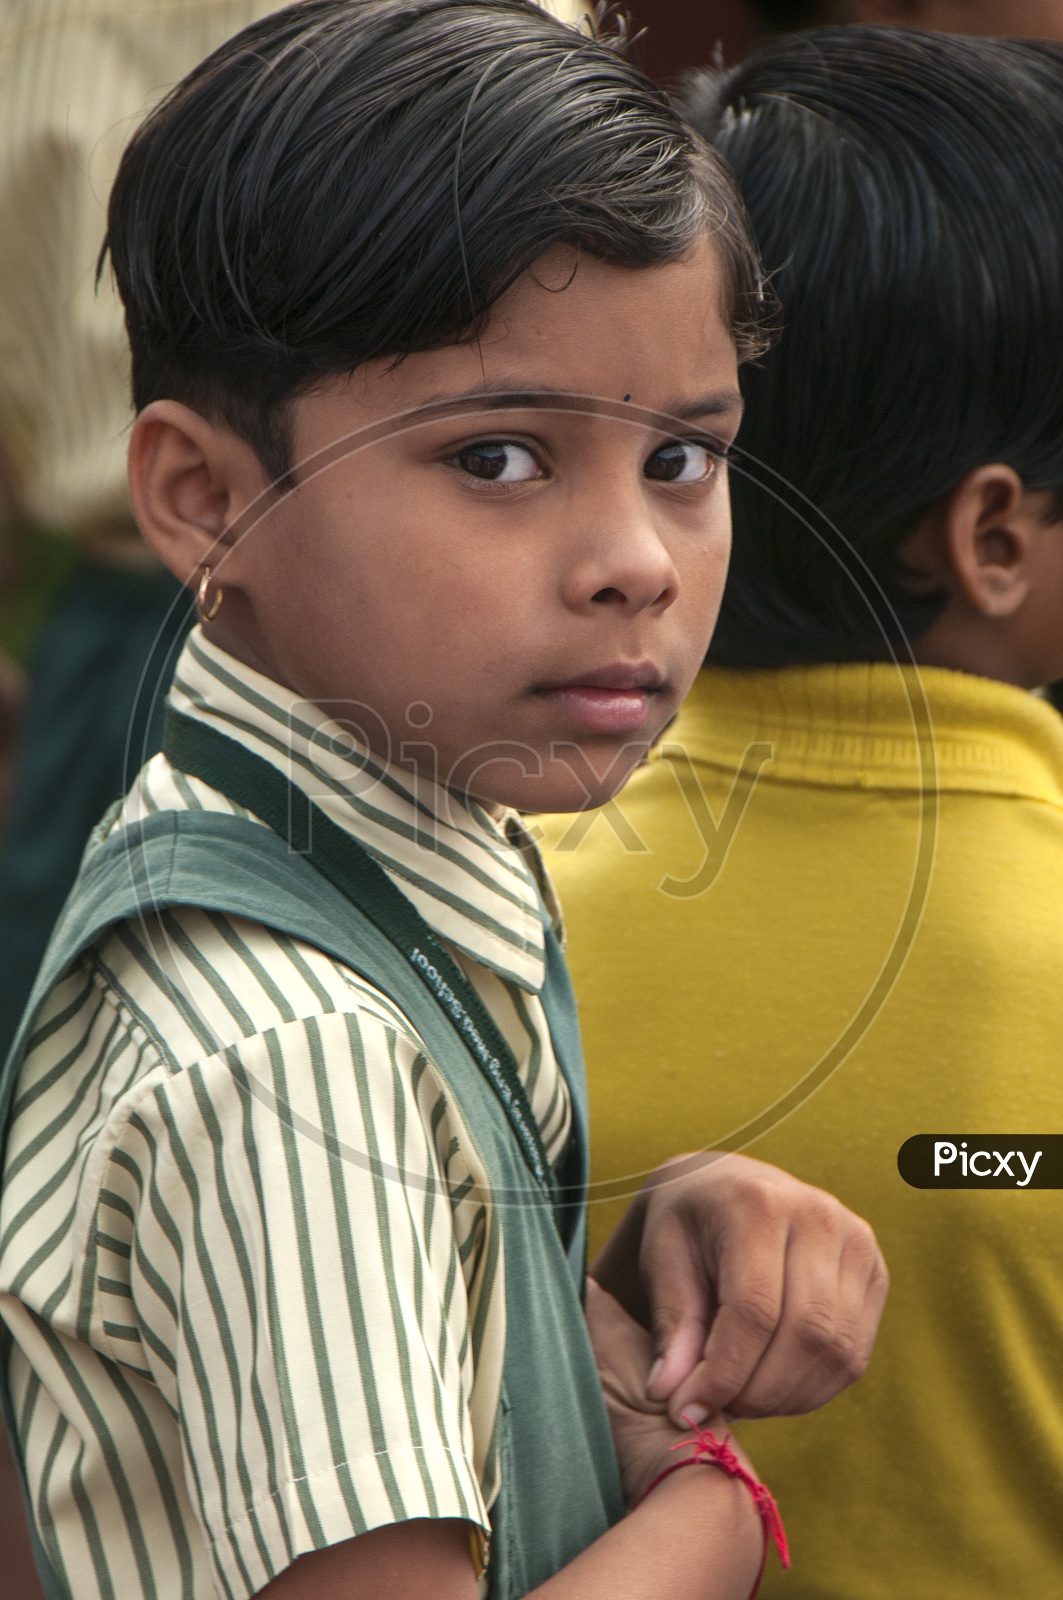 Premium Photo | Fashionable little boy in tie and formals cute hairstyle  stylish kid fashion children